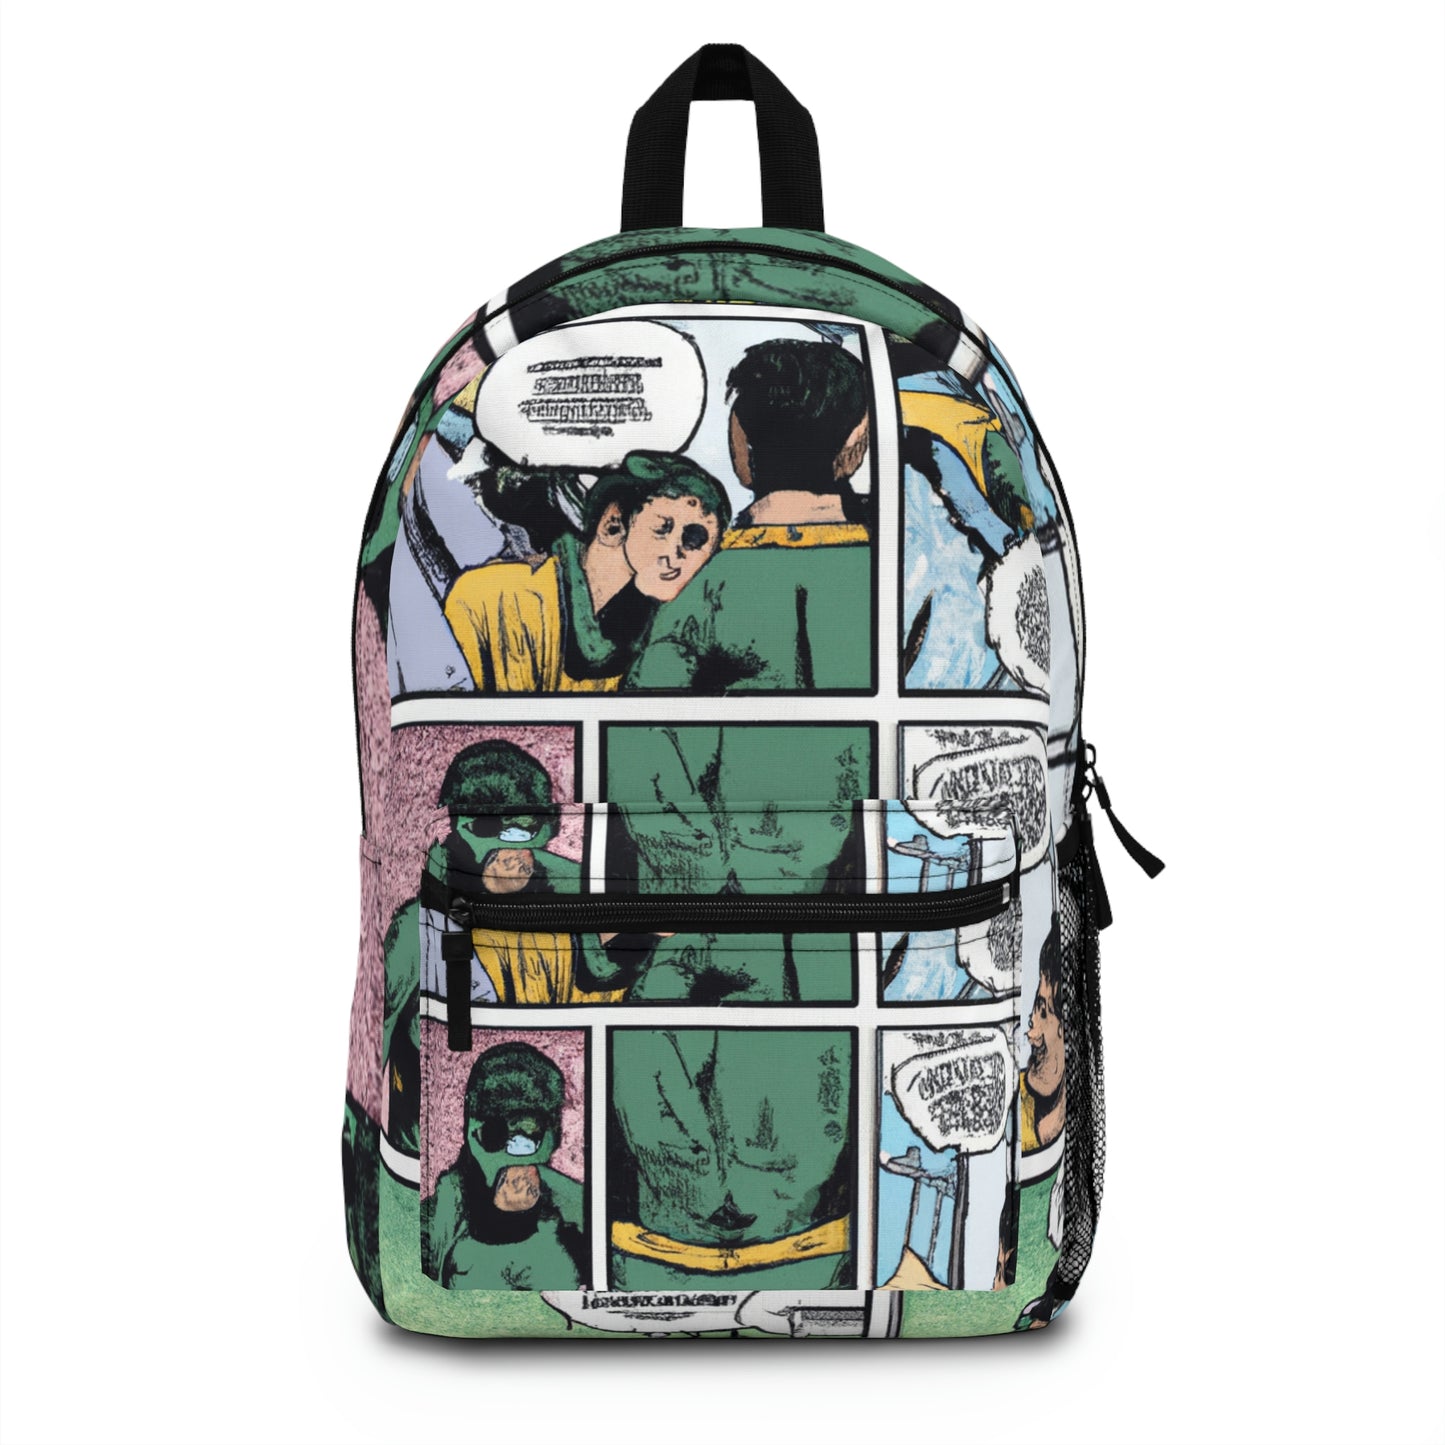 Scorchwoman - Comic Book Backpack